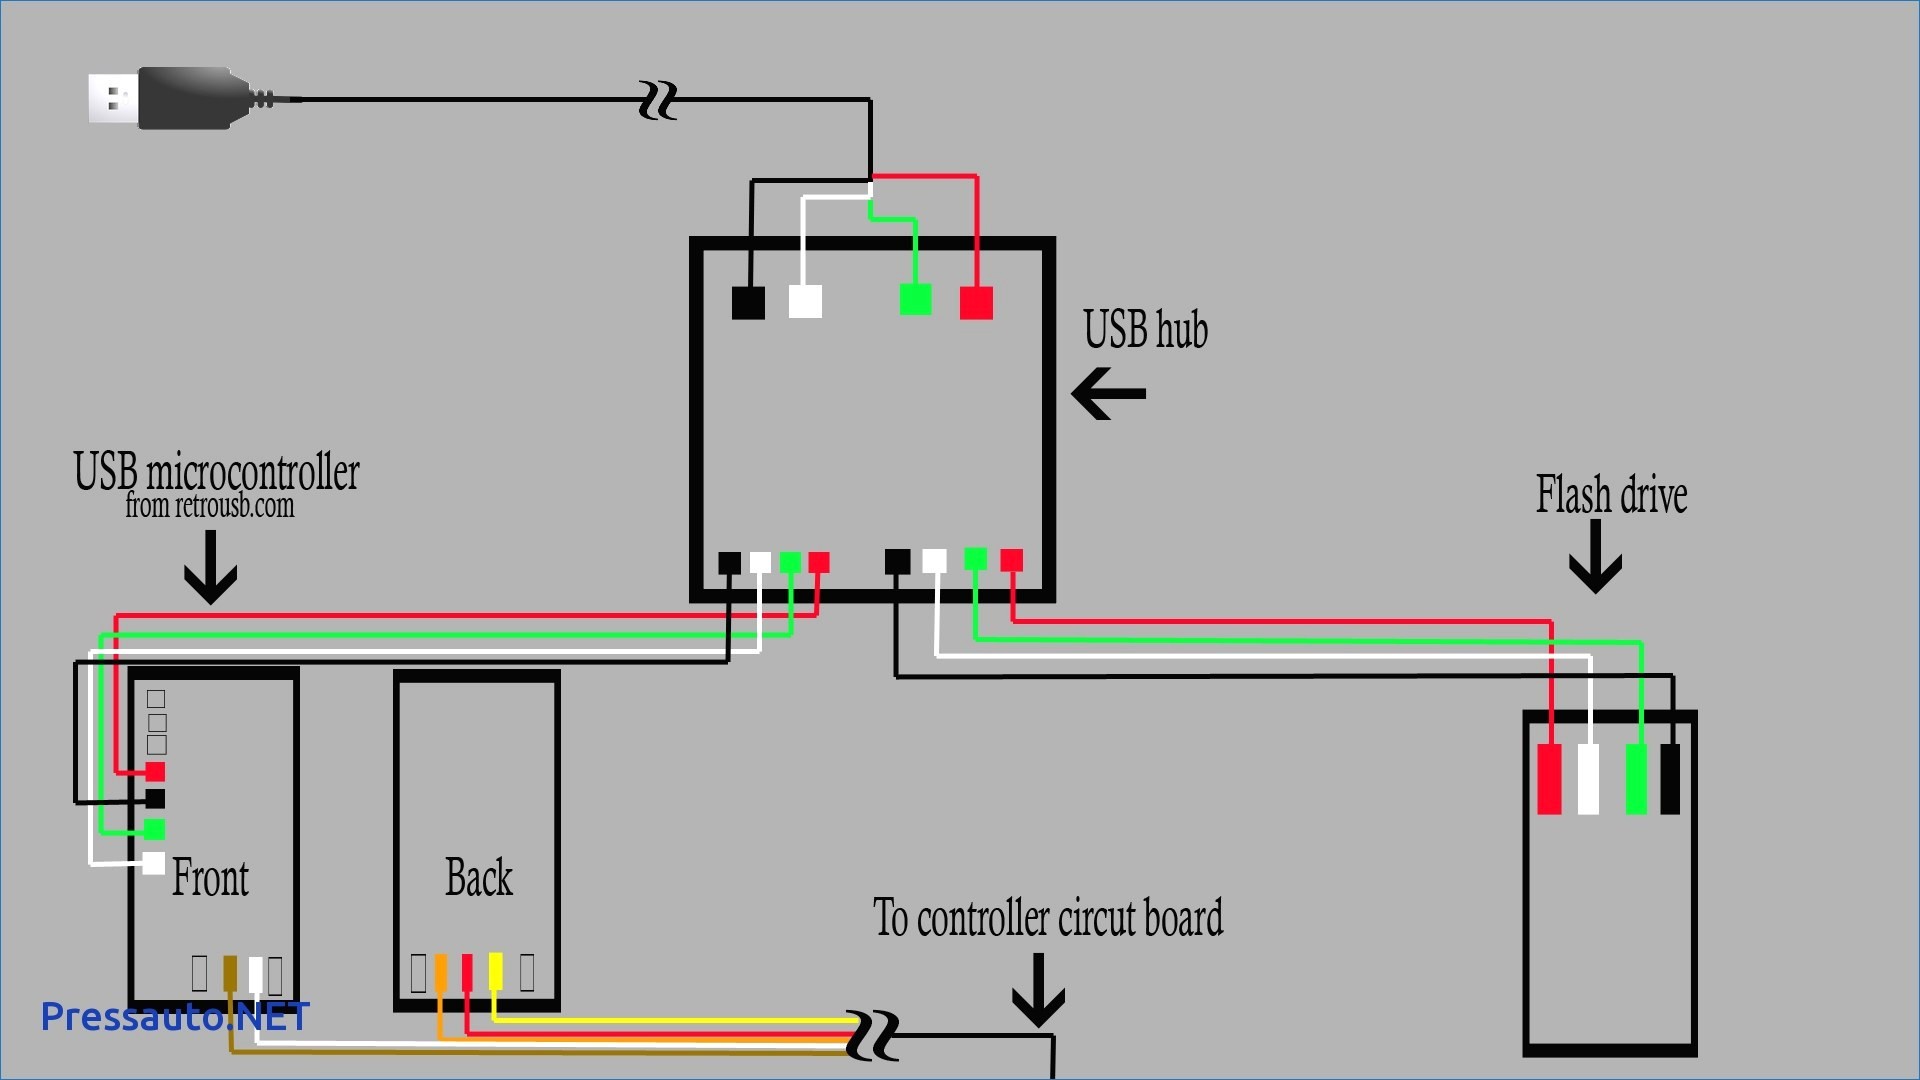 gamecube controller wiring diagram trusted wiring diagram u2022 rh soulmatestyle co nes controller circuit diagram Circuit Diagram Symbols